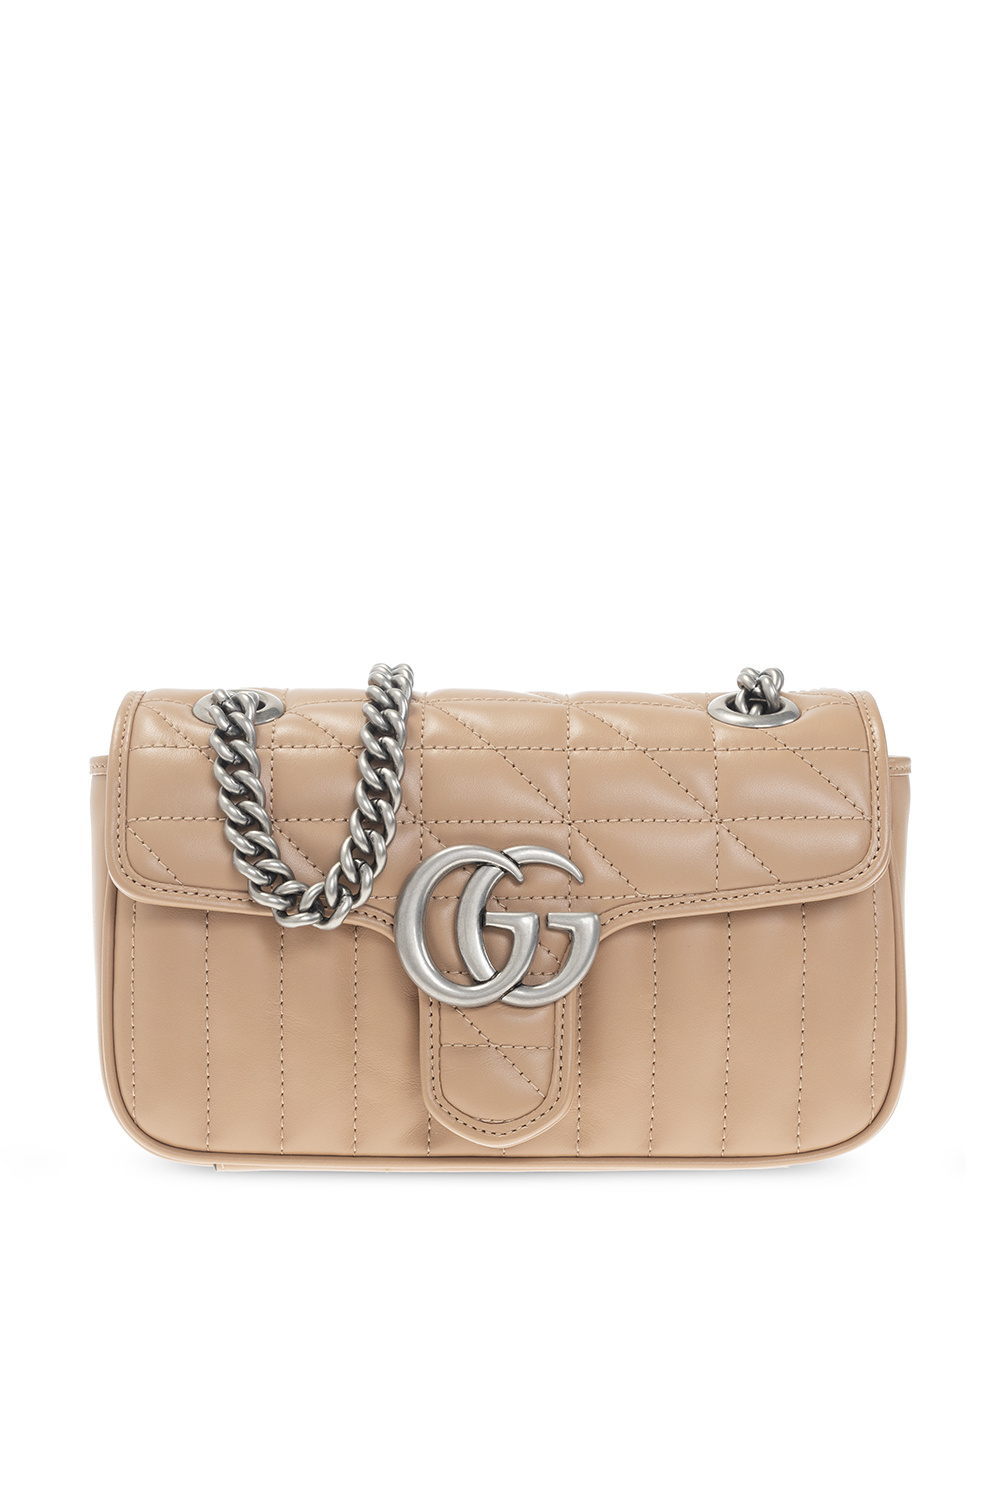 Am I A Bag Lady? Part of my collection: Gucci Marmont, Louis Vuitton Epi  Alma BB, Mansur Gavriel Mini Mini Bucket Bag